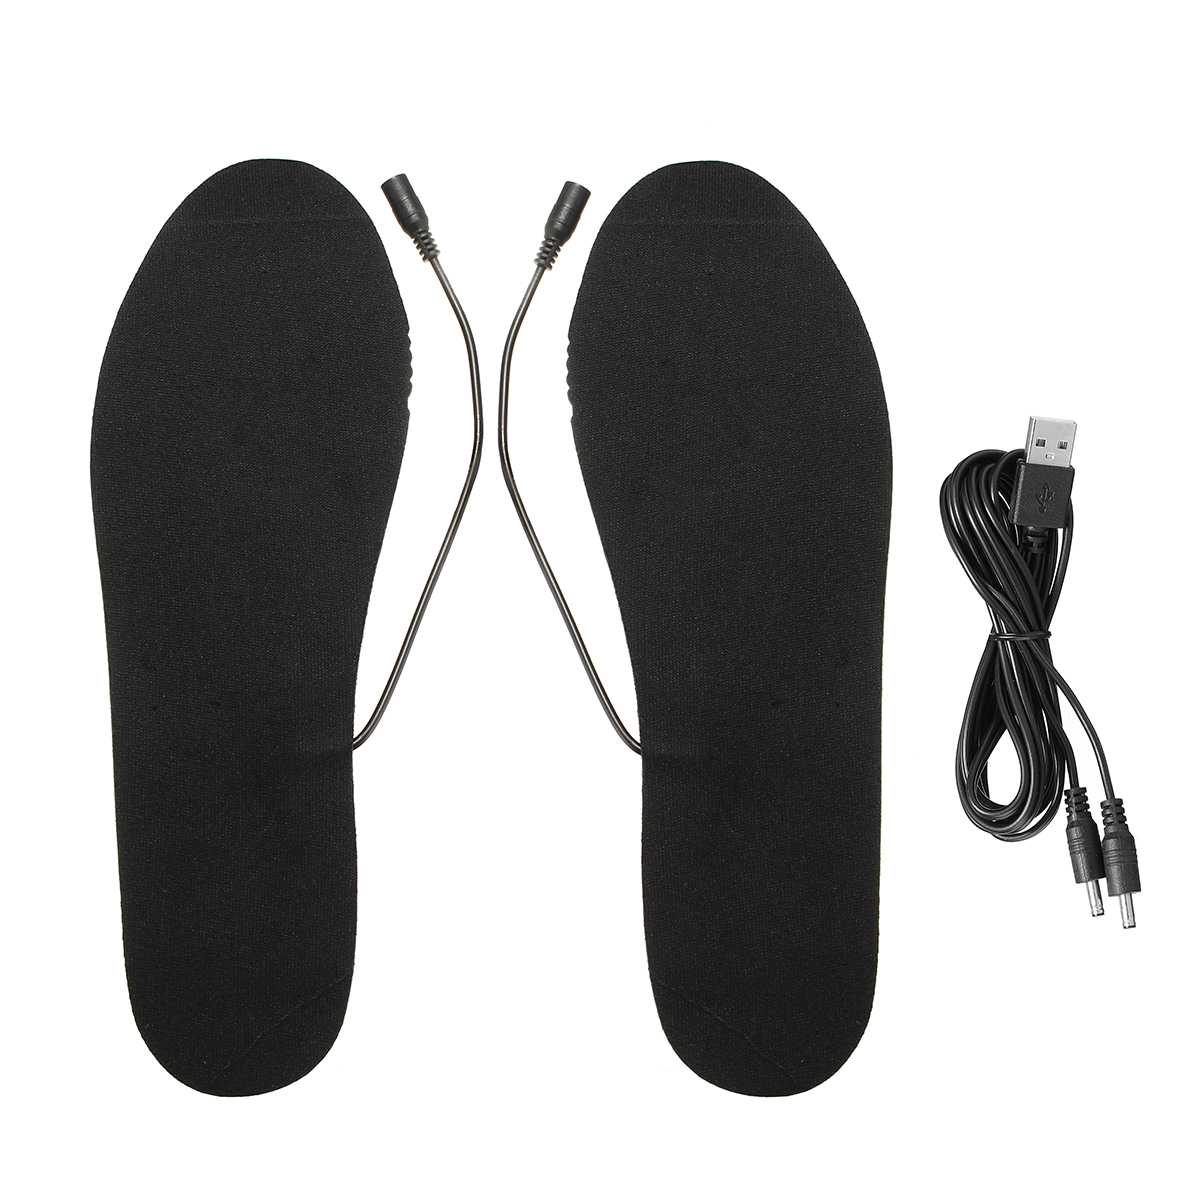 

USB Стельки для обуви с подогревом с подогревом Нагреватель футов Носки Boot Pad Winter